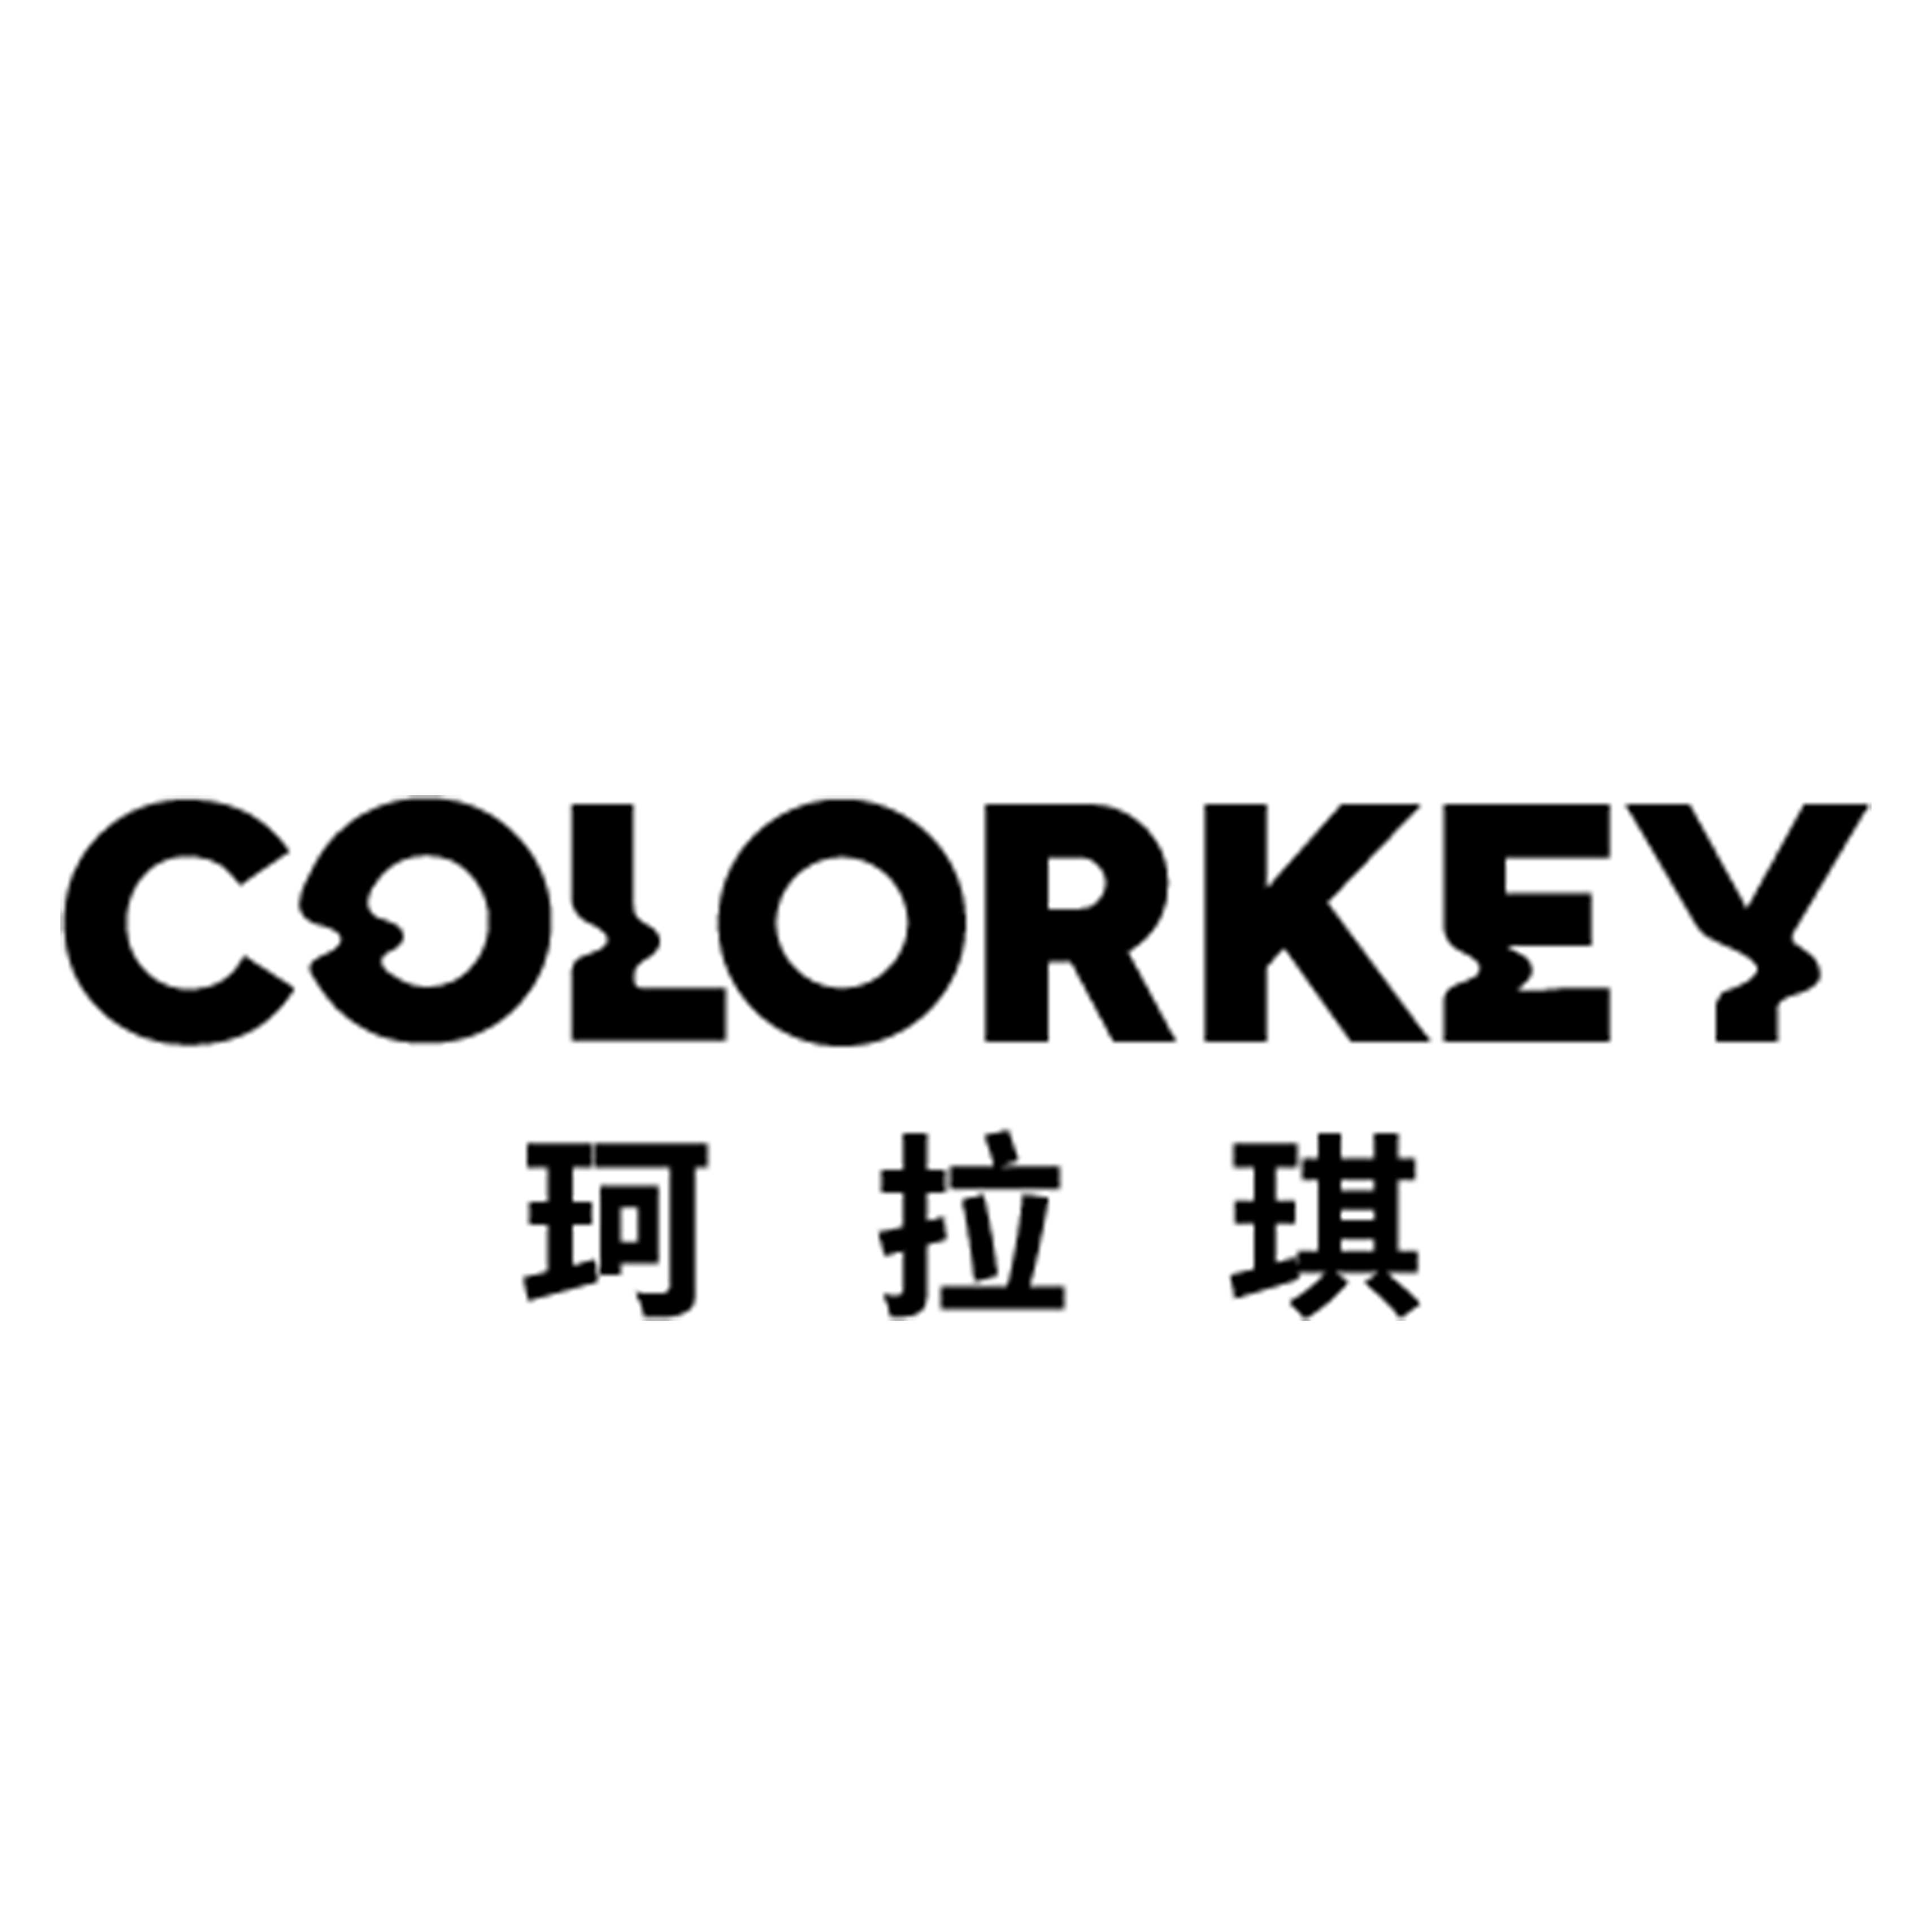 colorkey